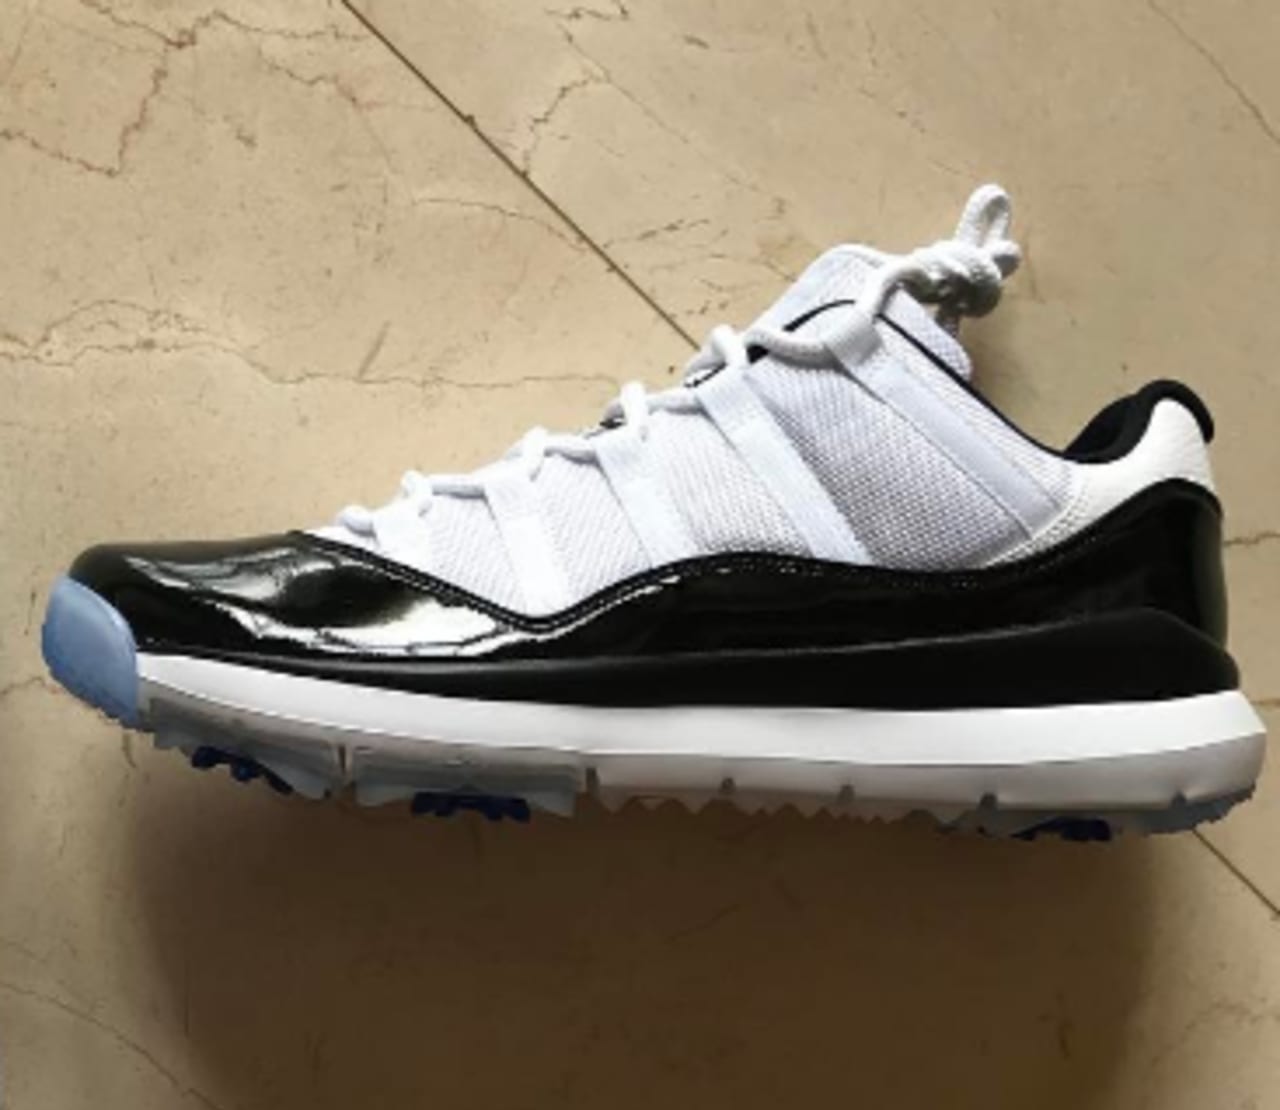 jordan 11 golf shoes 2018